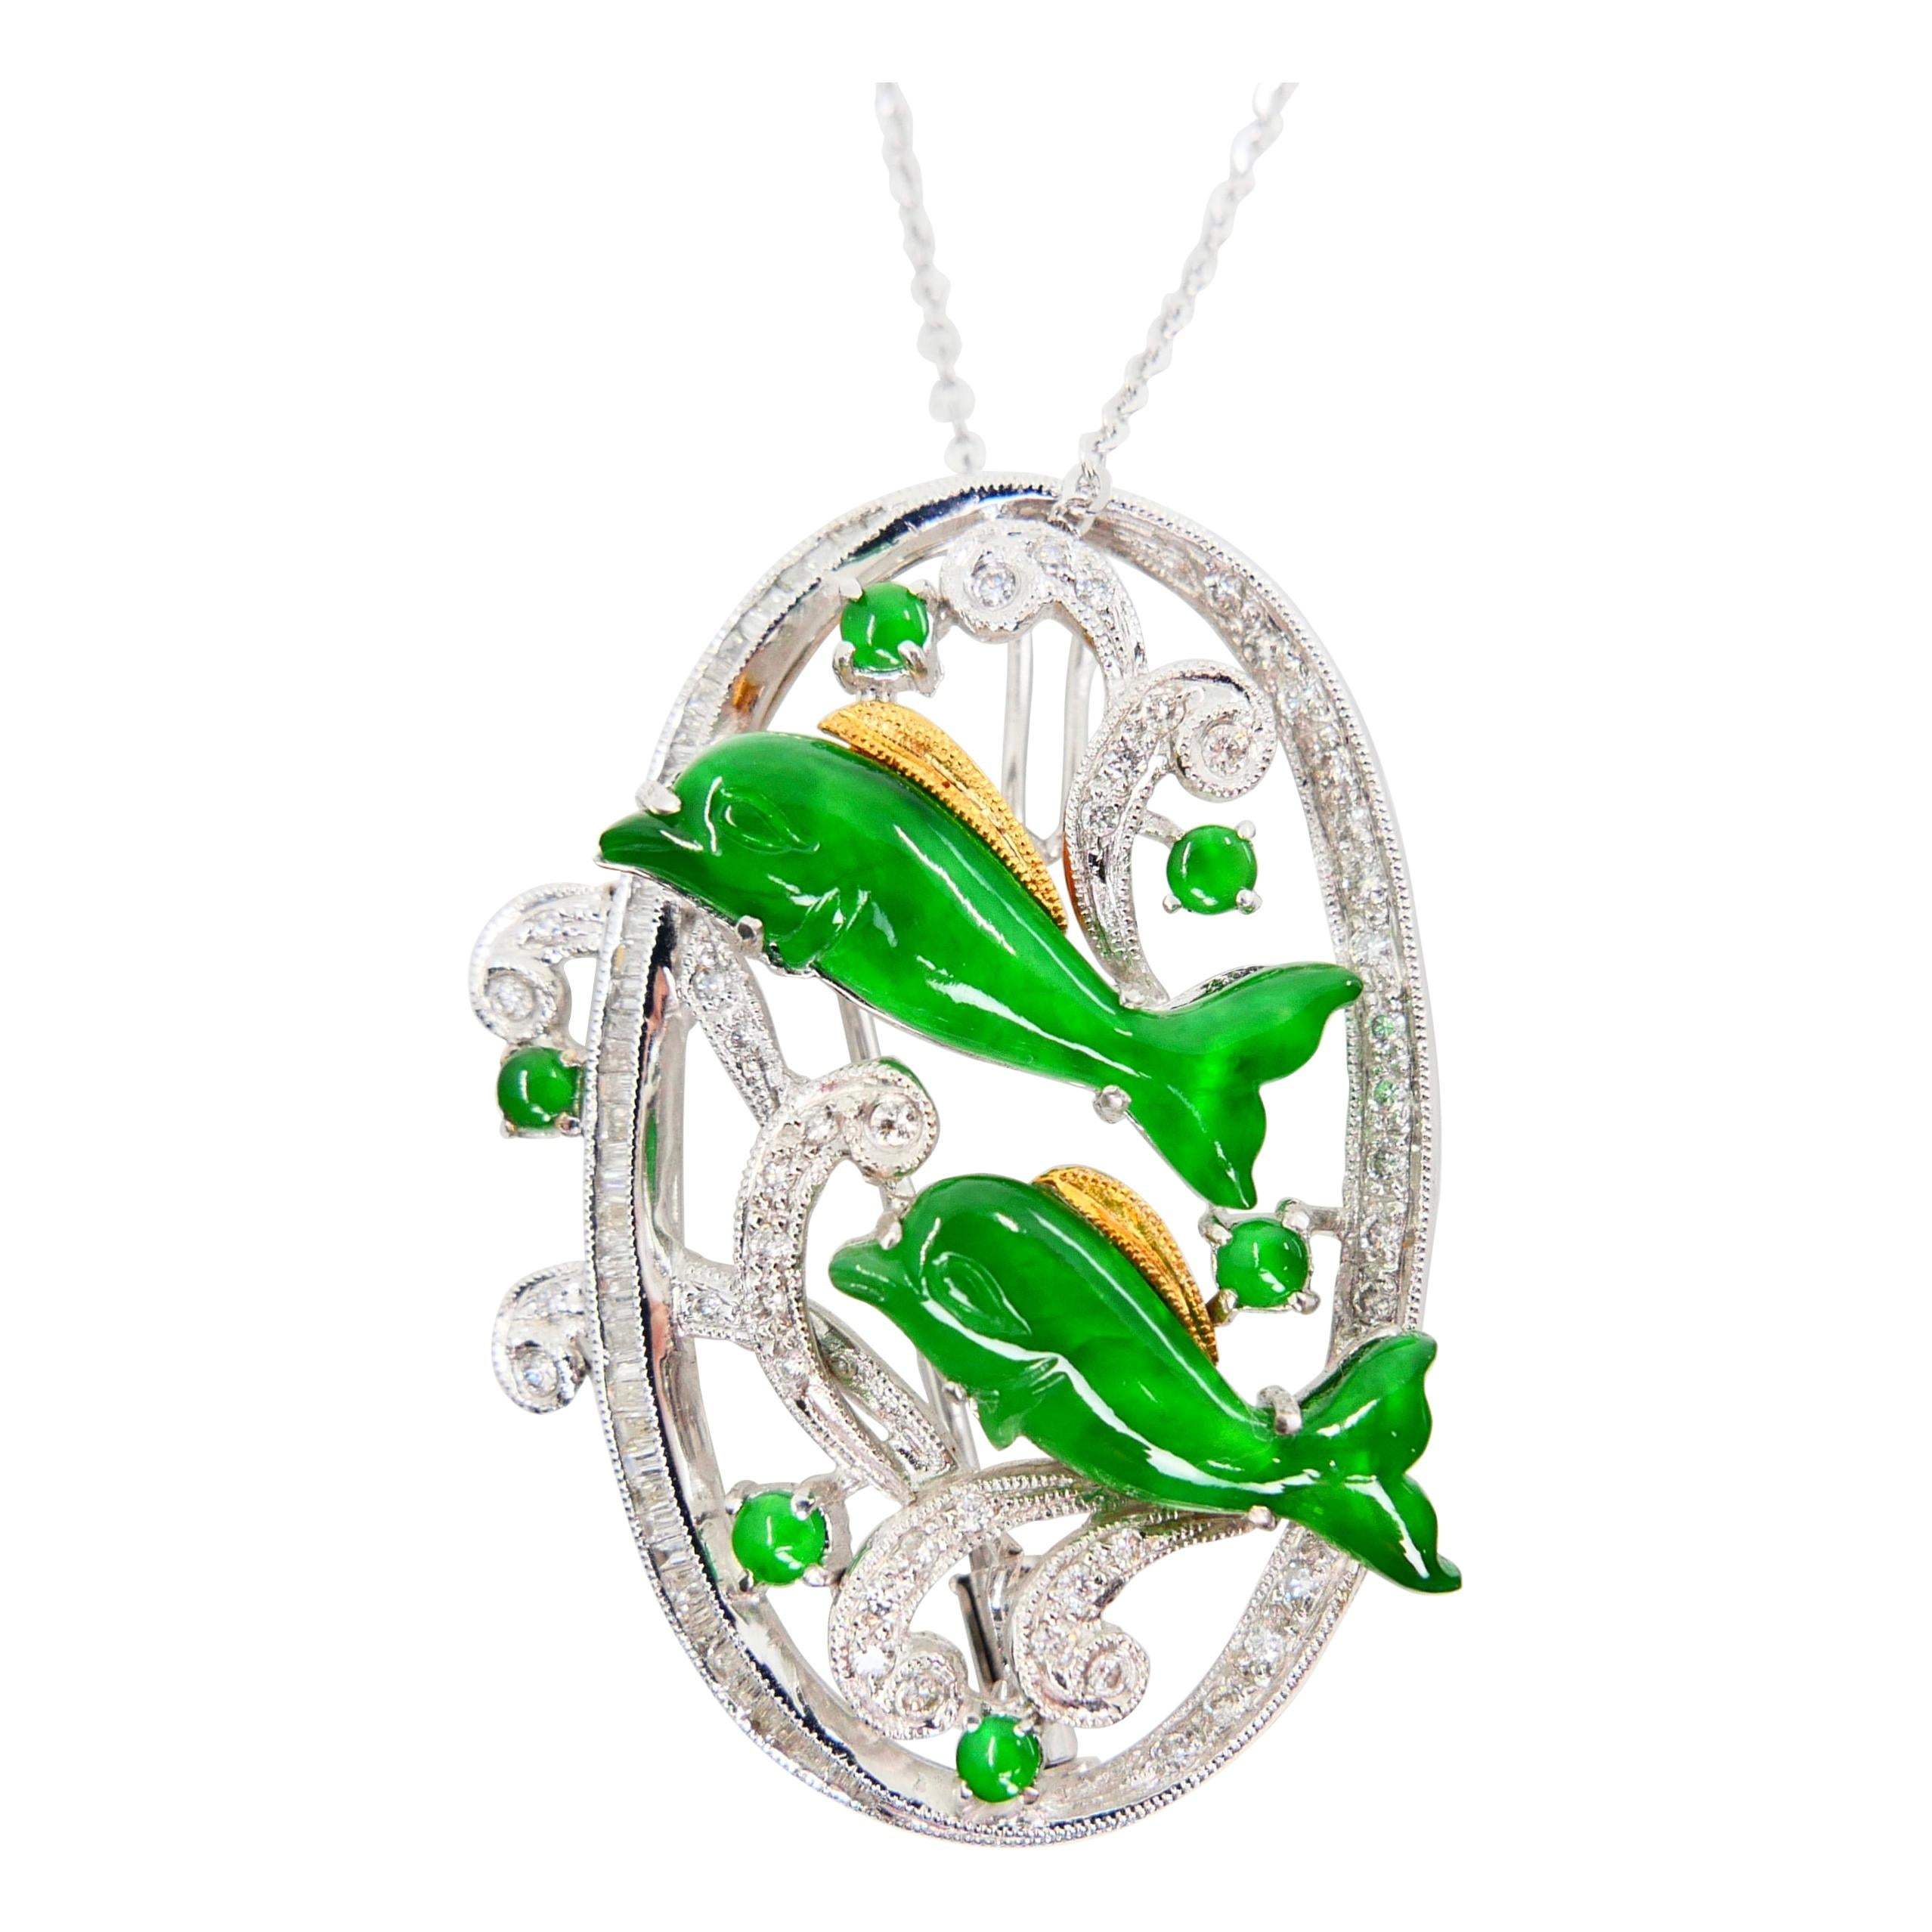 Broche pendentif en diamants et jade naturel certifié vert pomme vif, avec dauphins